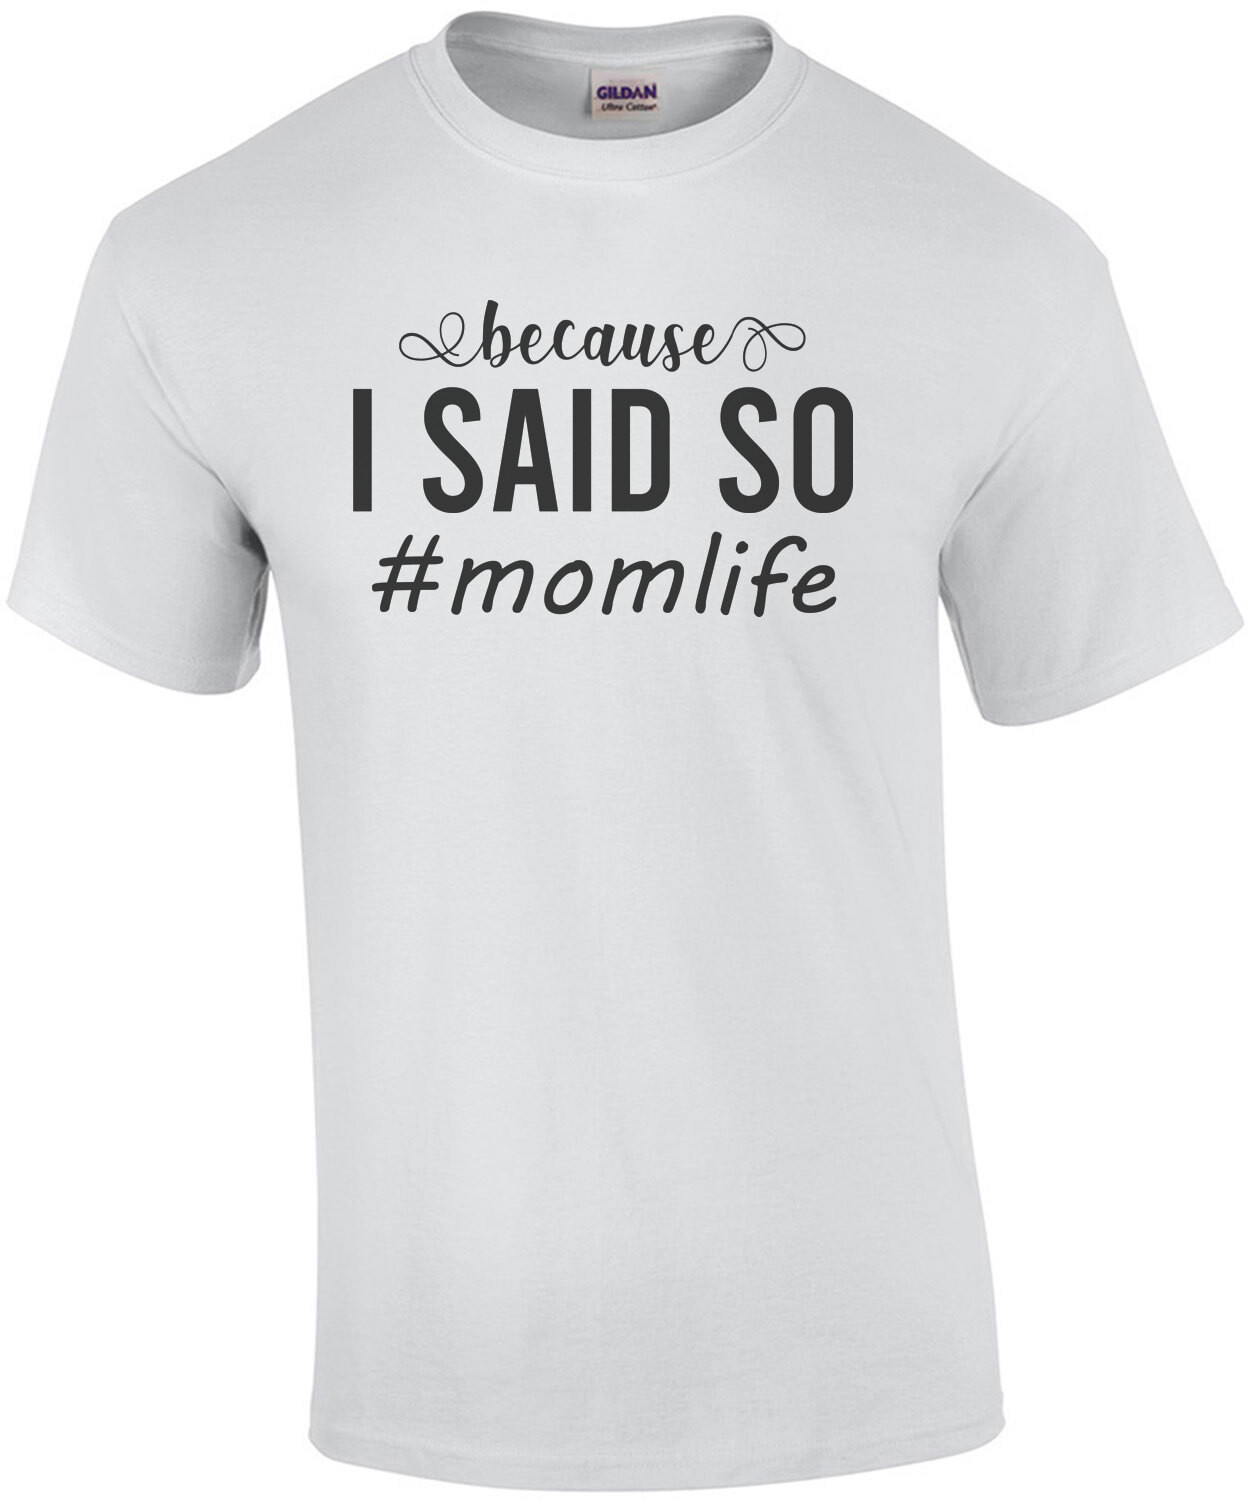 Because I said so # momlife - funny mom t-shirt